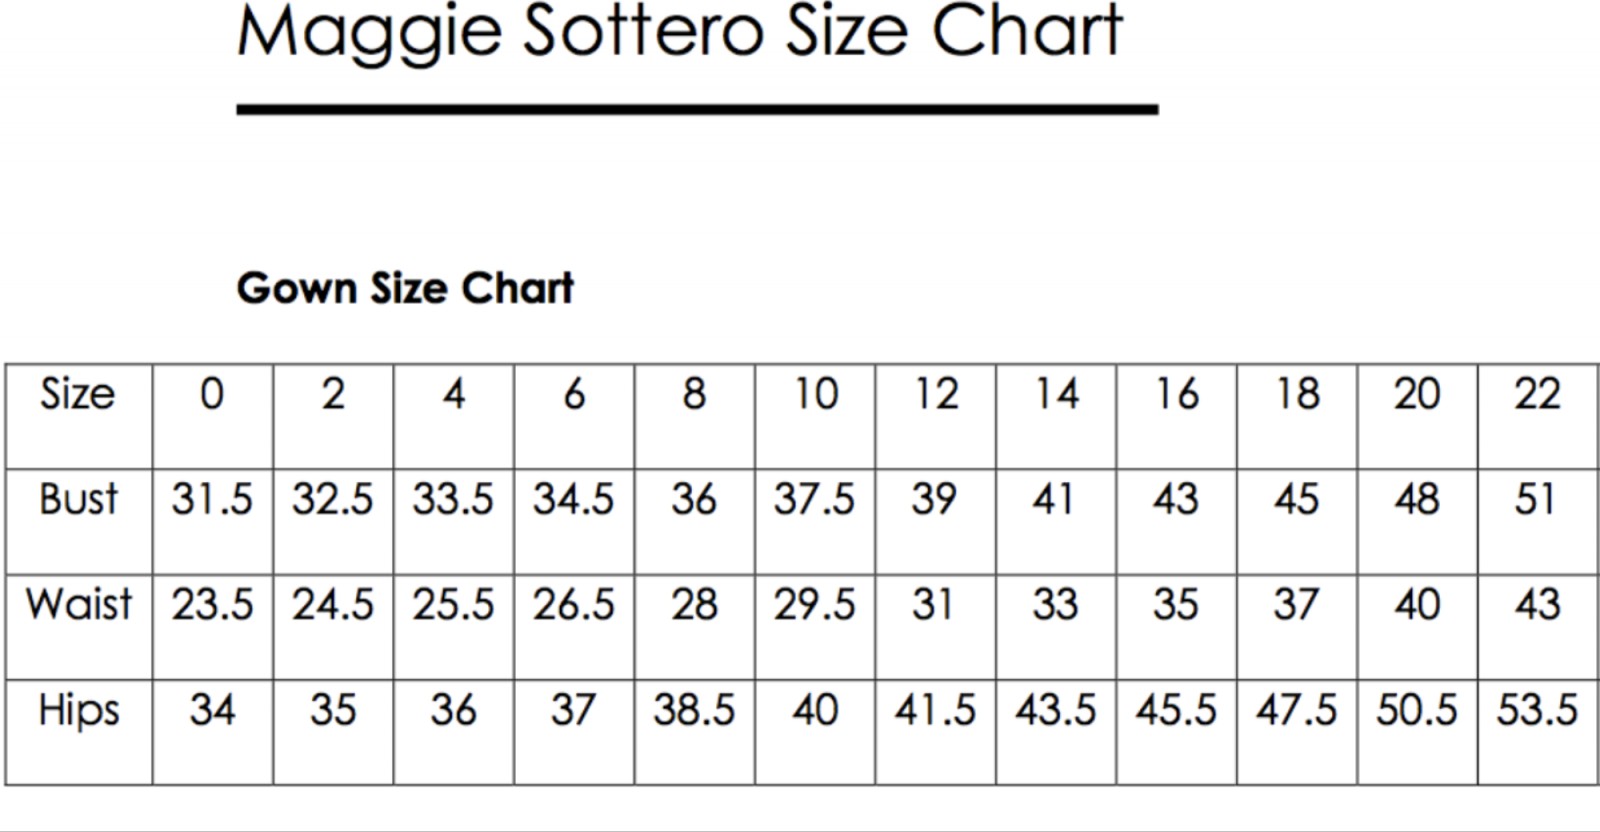 Maggie Sottero Uk Size Chart